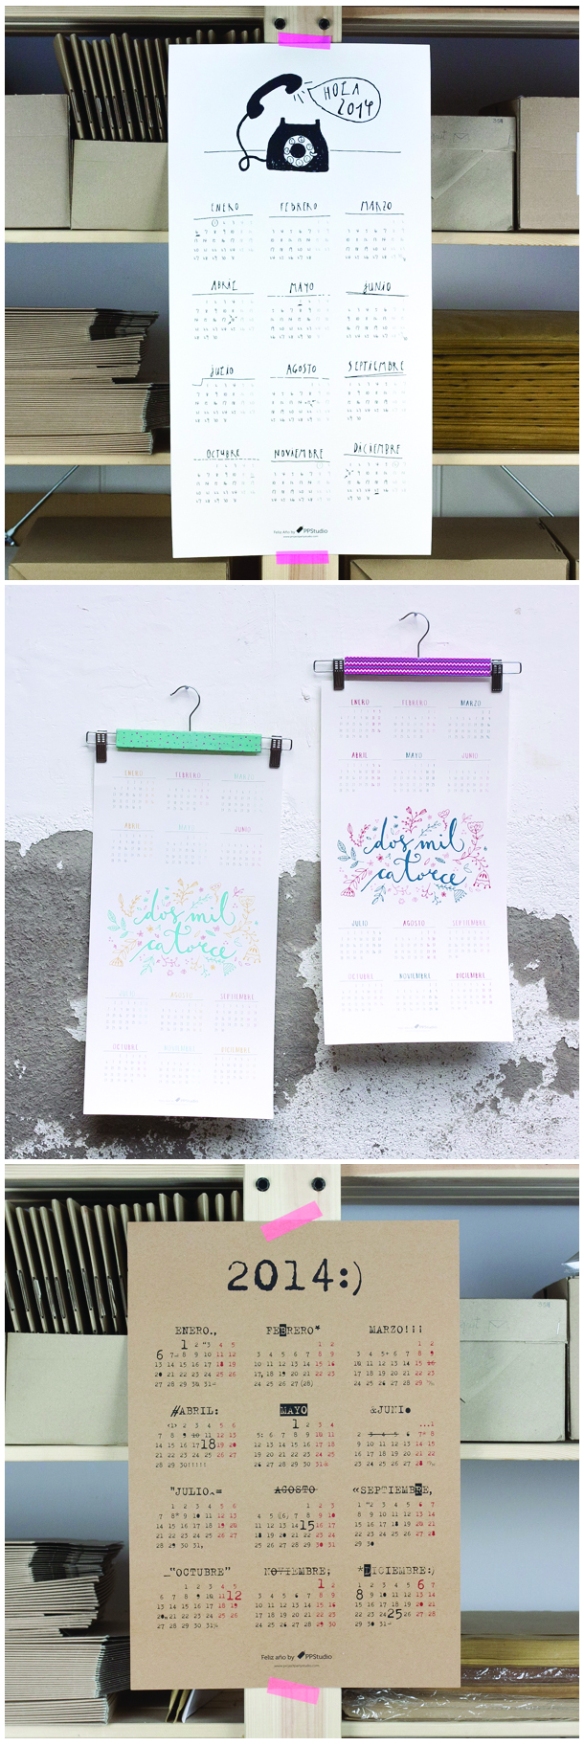 SweetSuiteBlog - calendario 2014 ppstudio